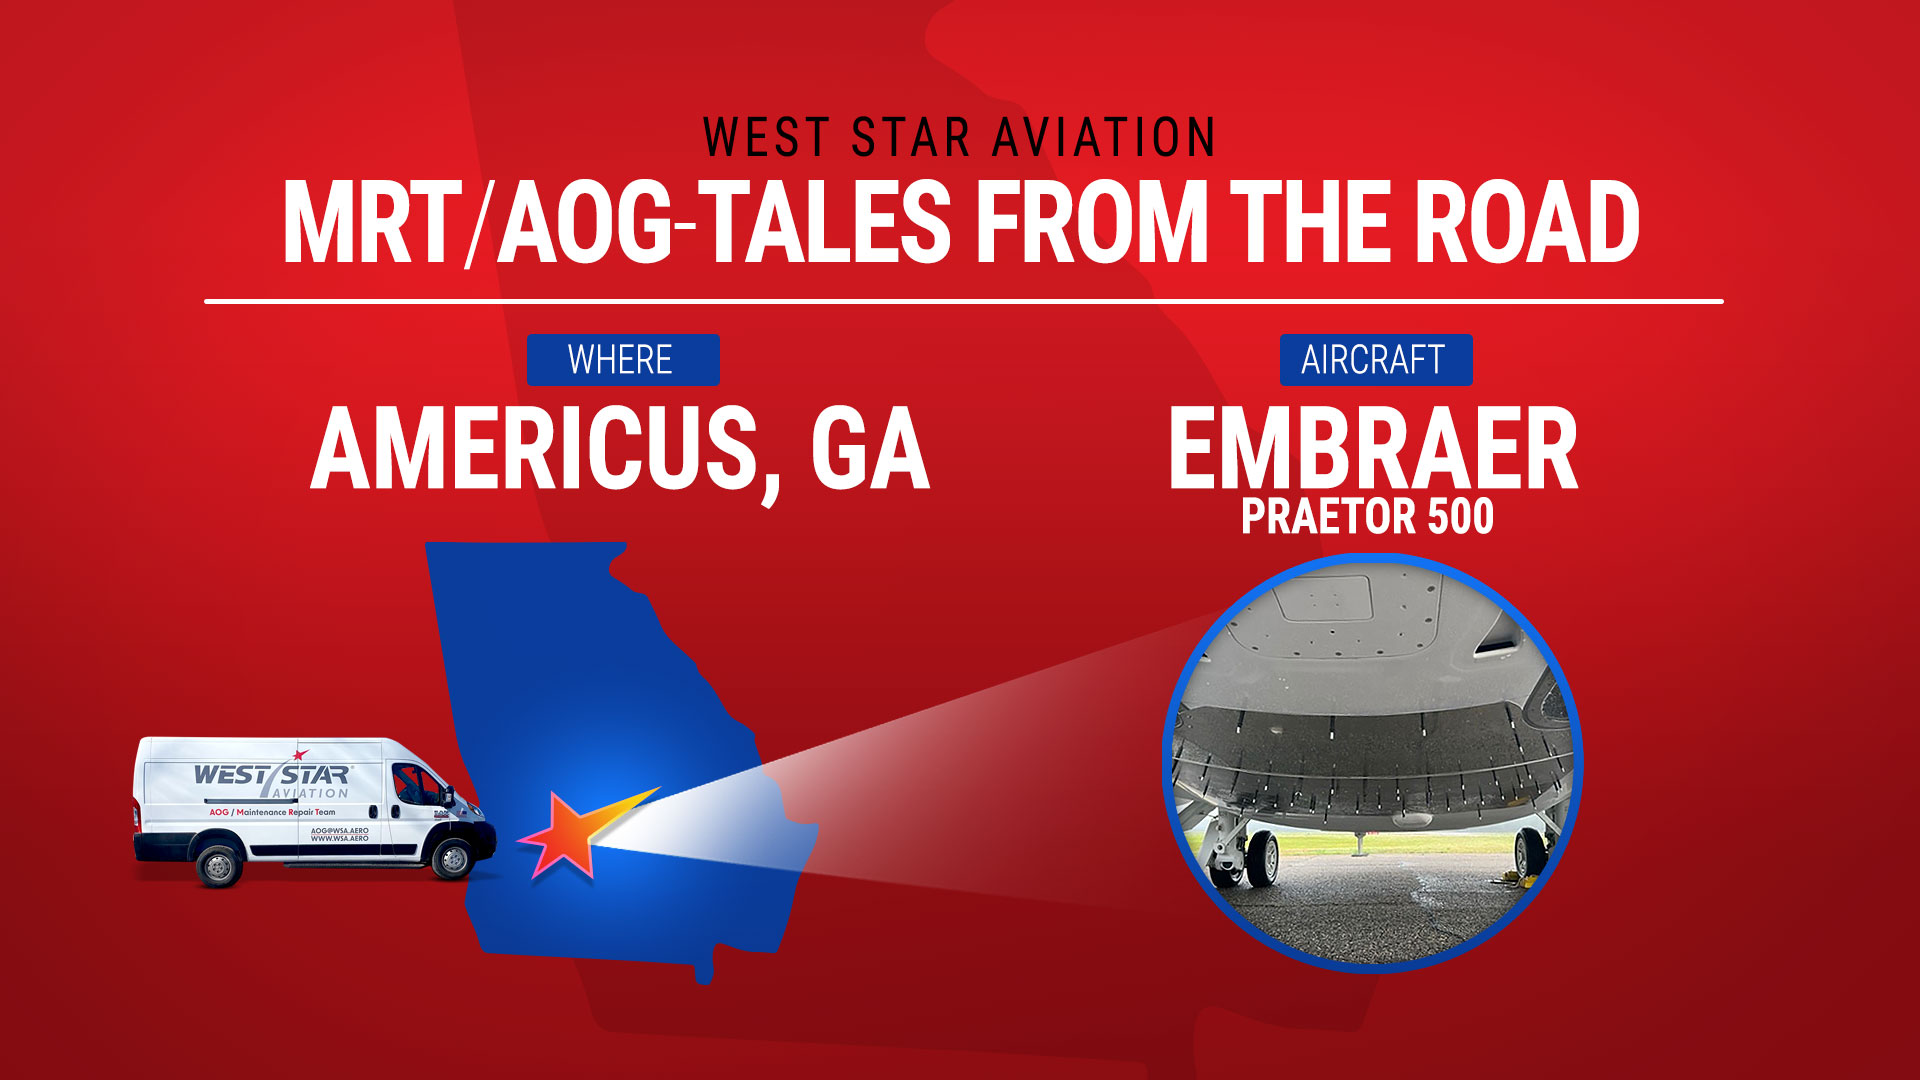 Americus, Georgia: Embraer Praetor 500